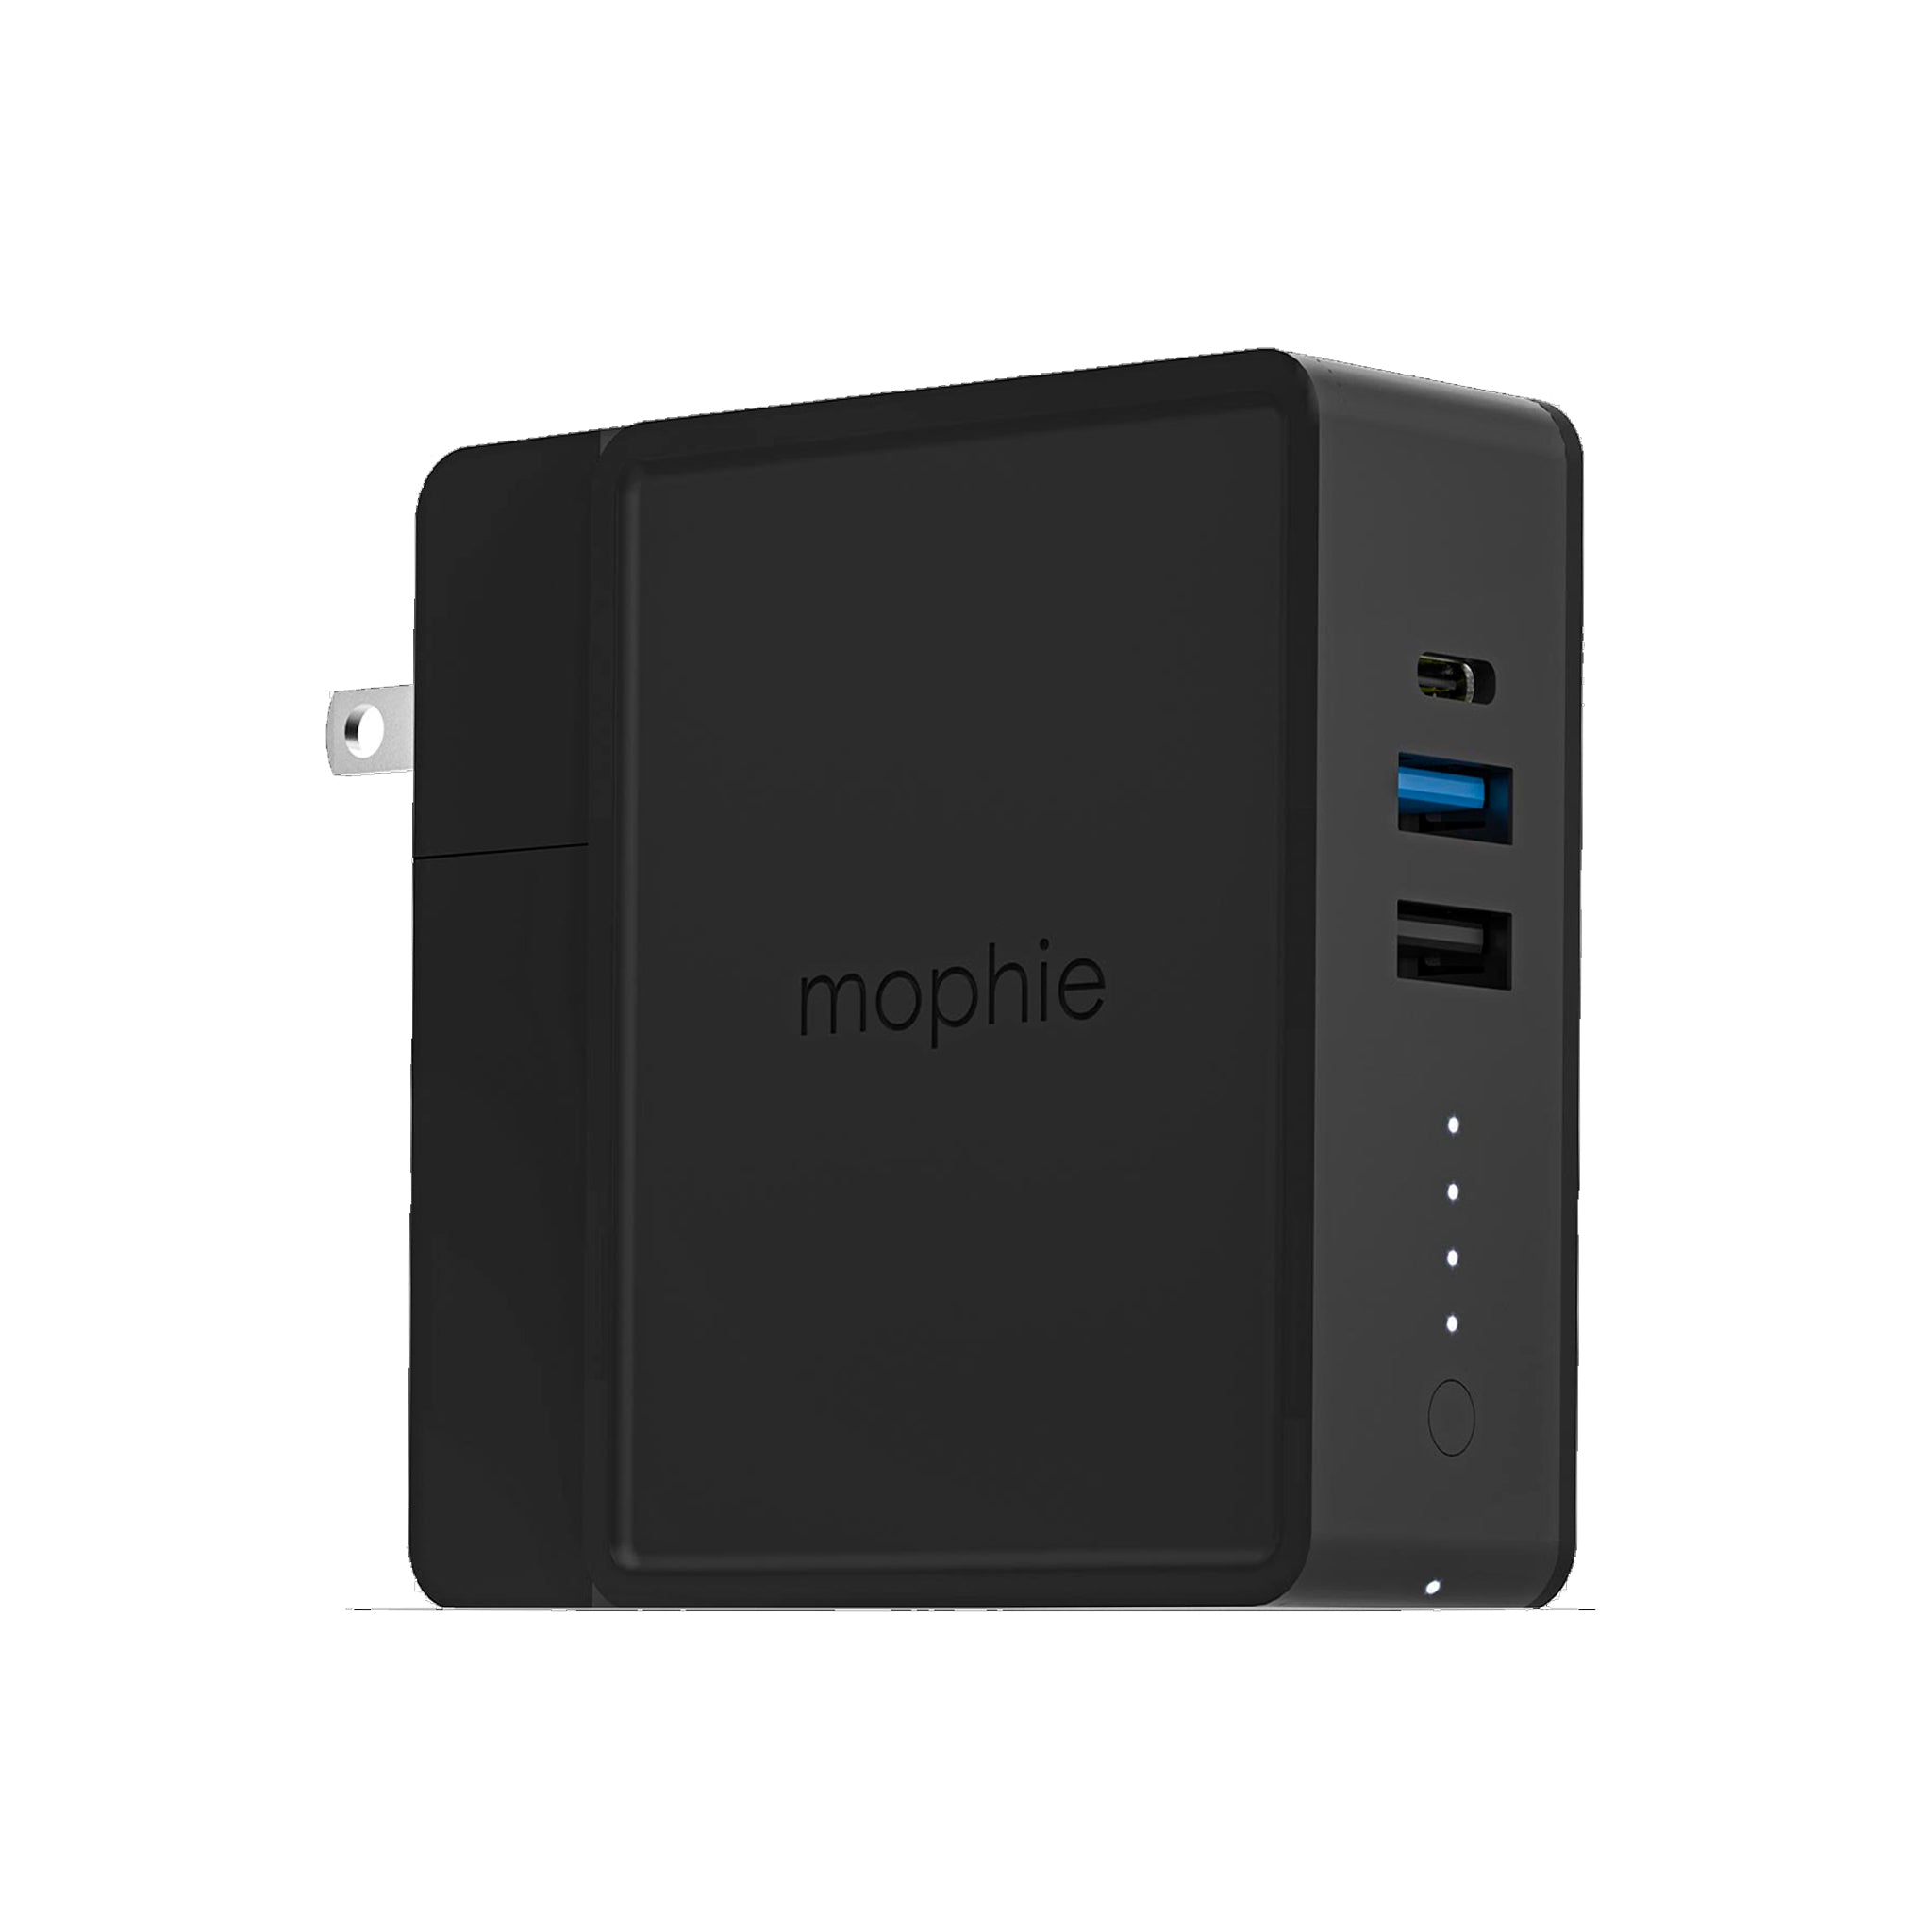 Mophie - Powerstation Hub Wireless Charging Power Bank 6,000 Mah - Black